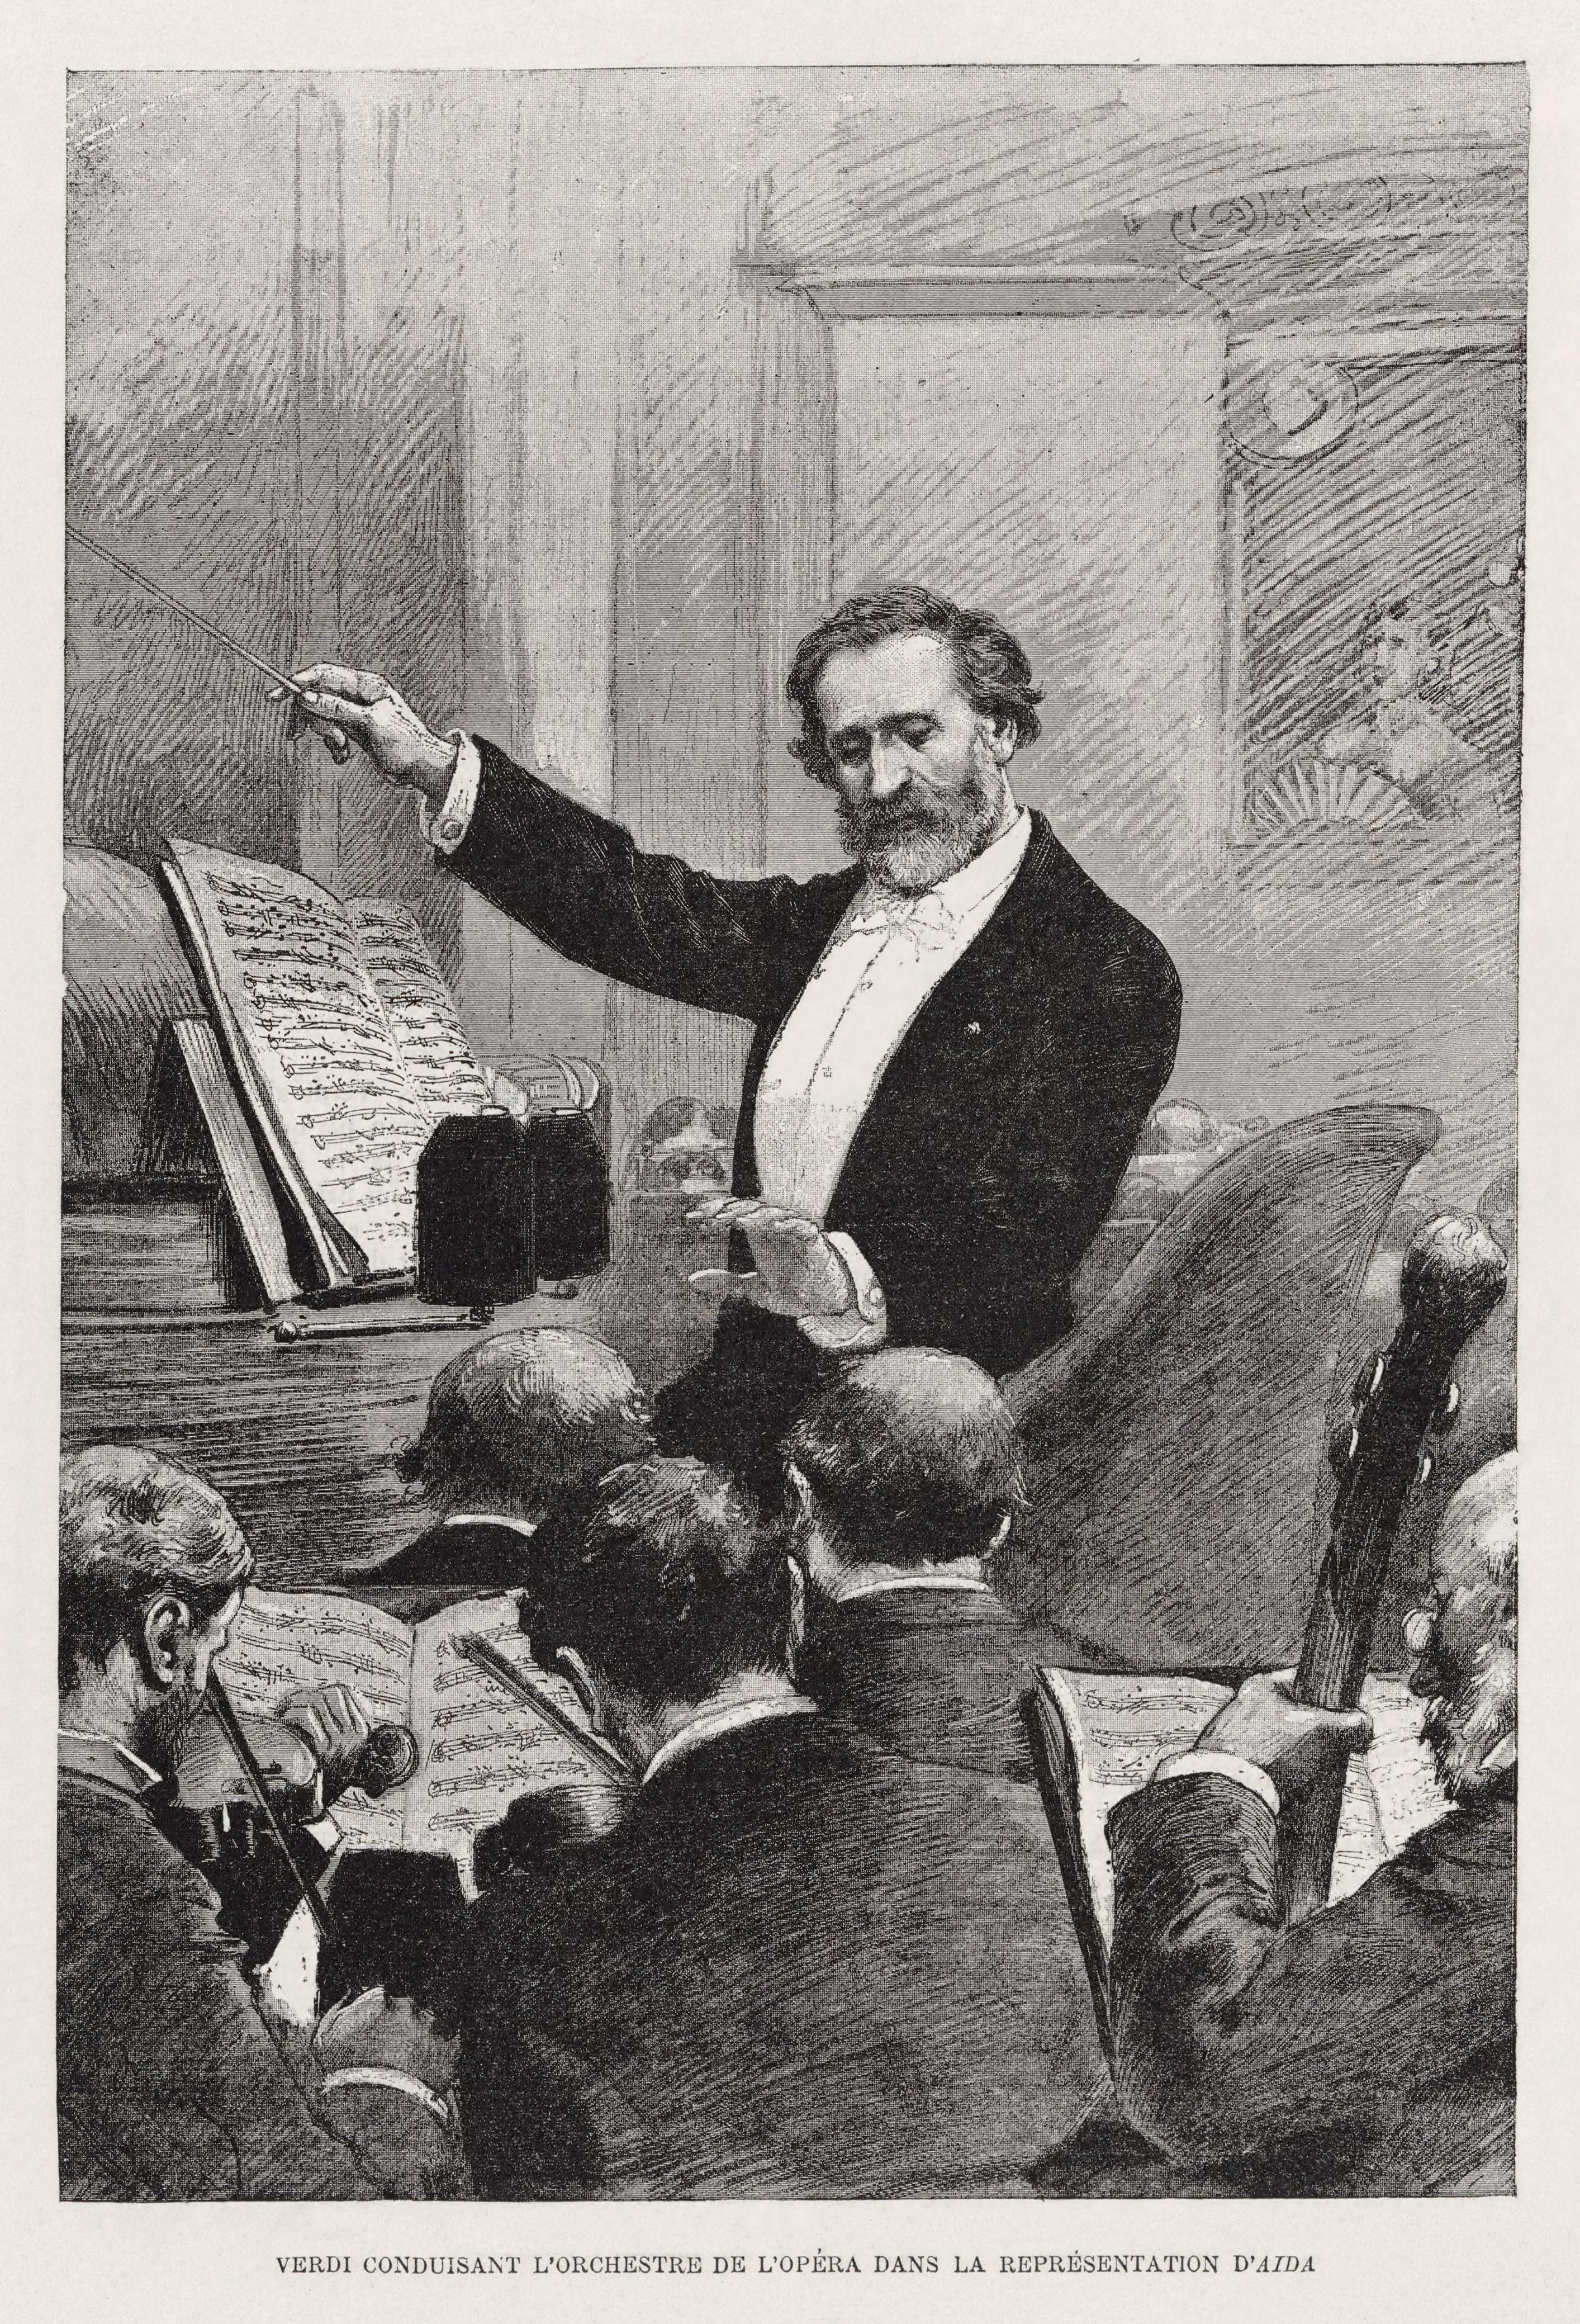 Illustration of Giuseppe Verdi conducting at the Palais Garnier by Adrien Marie, 1881.